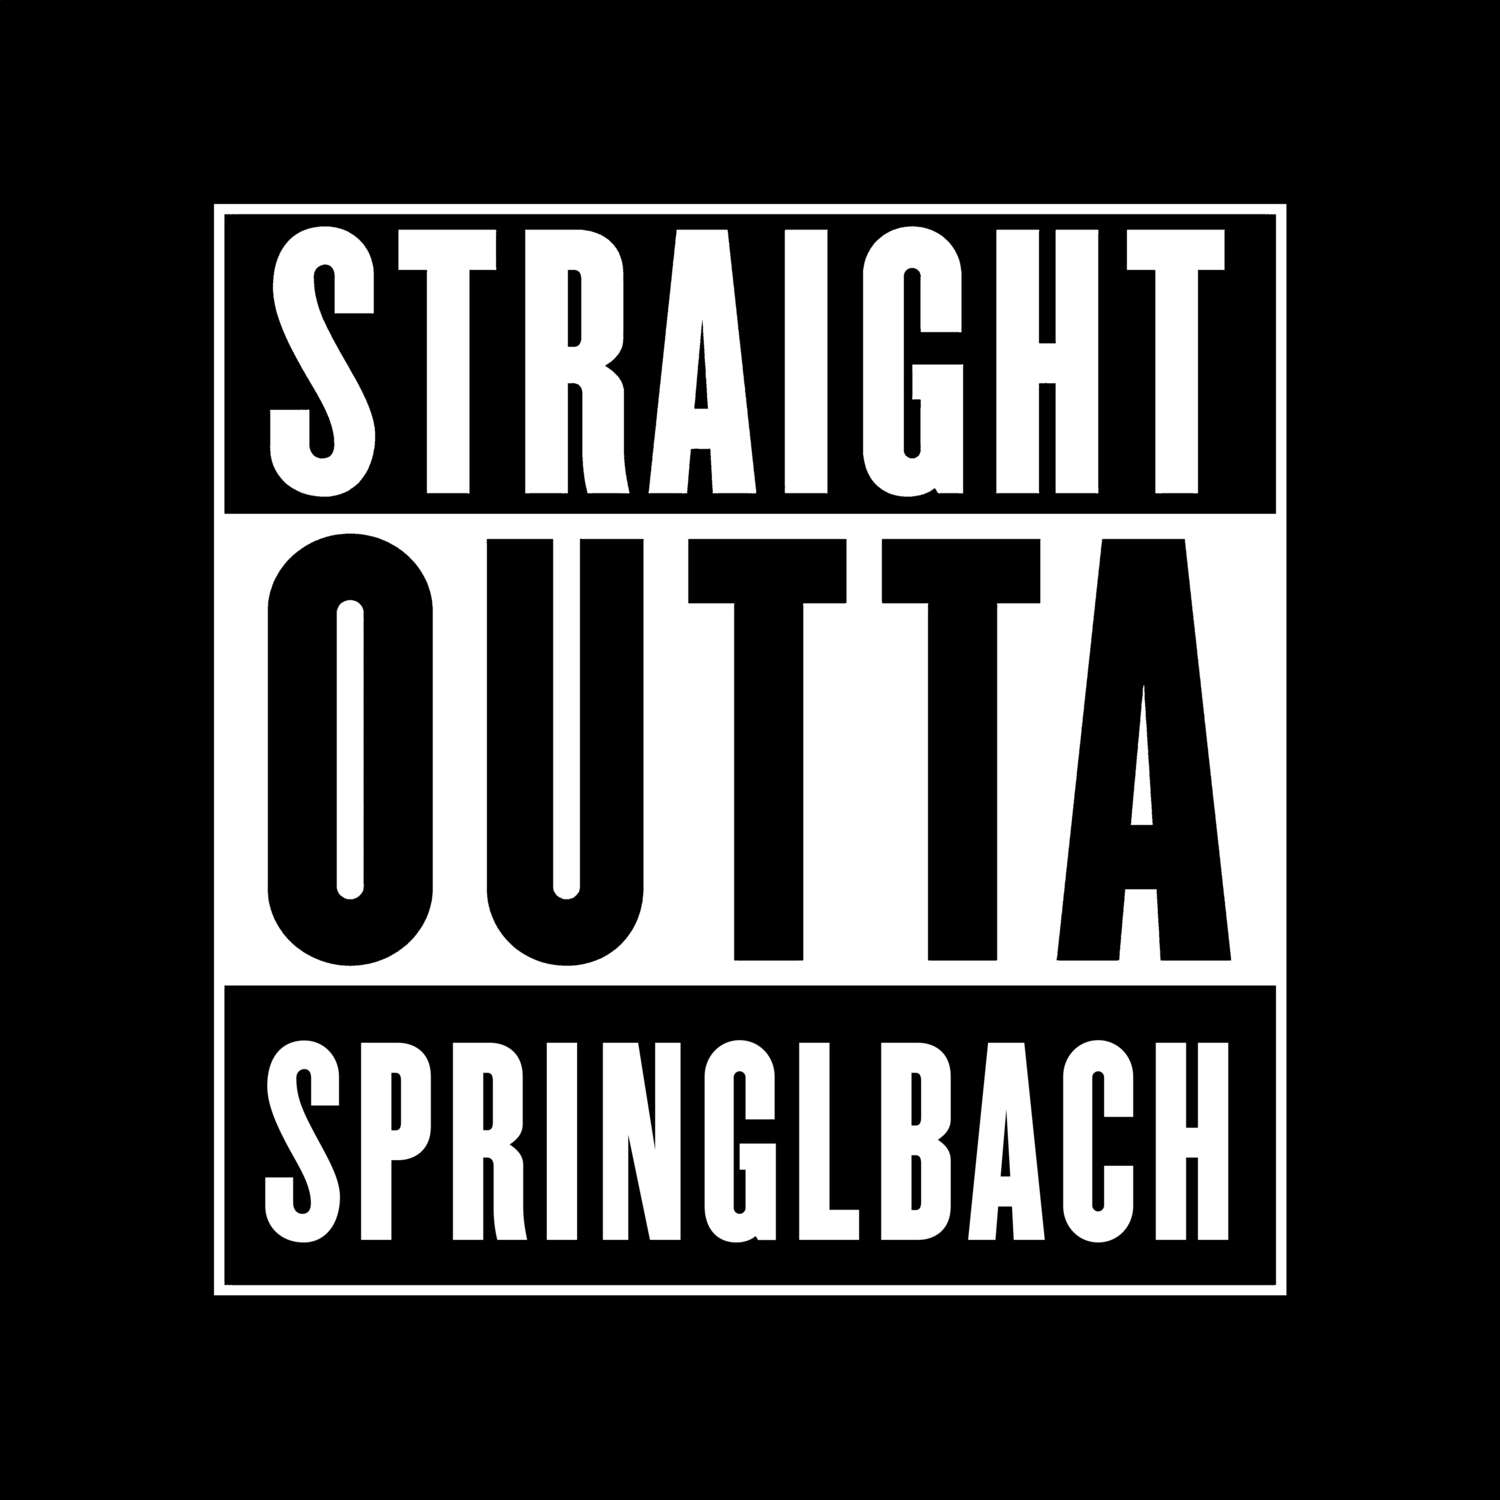 Springlbach T-Shirt »Straight Outta«